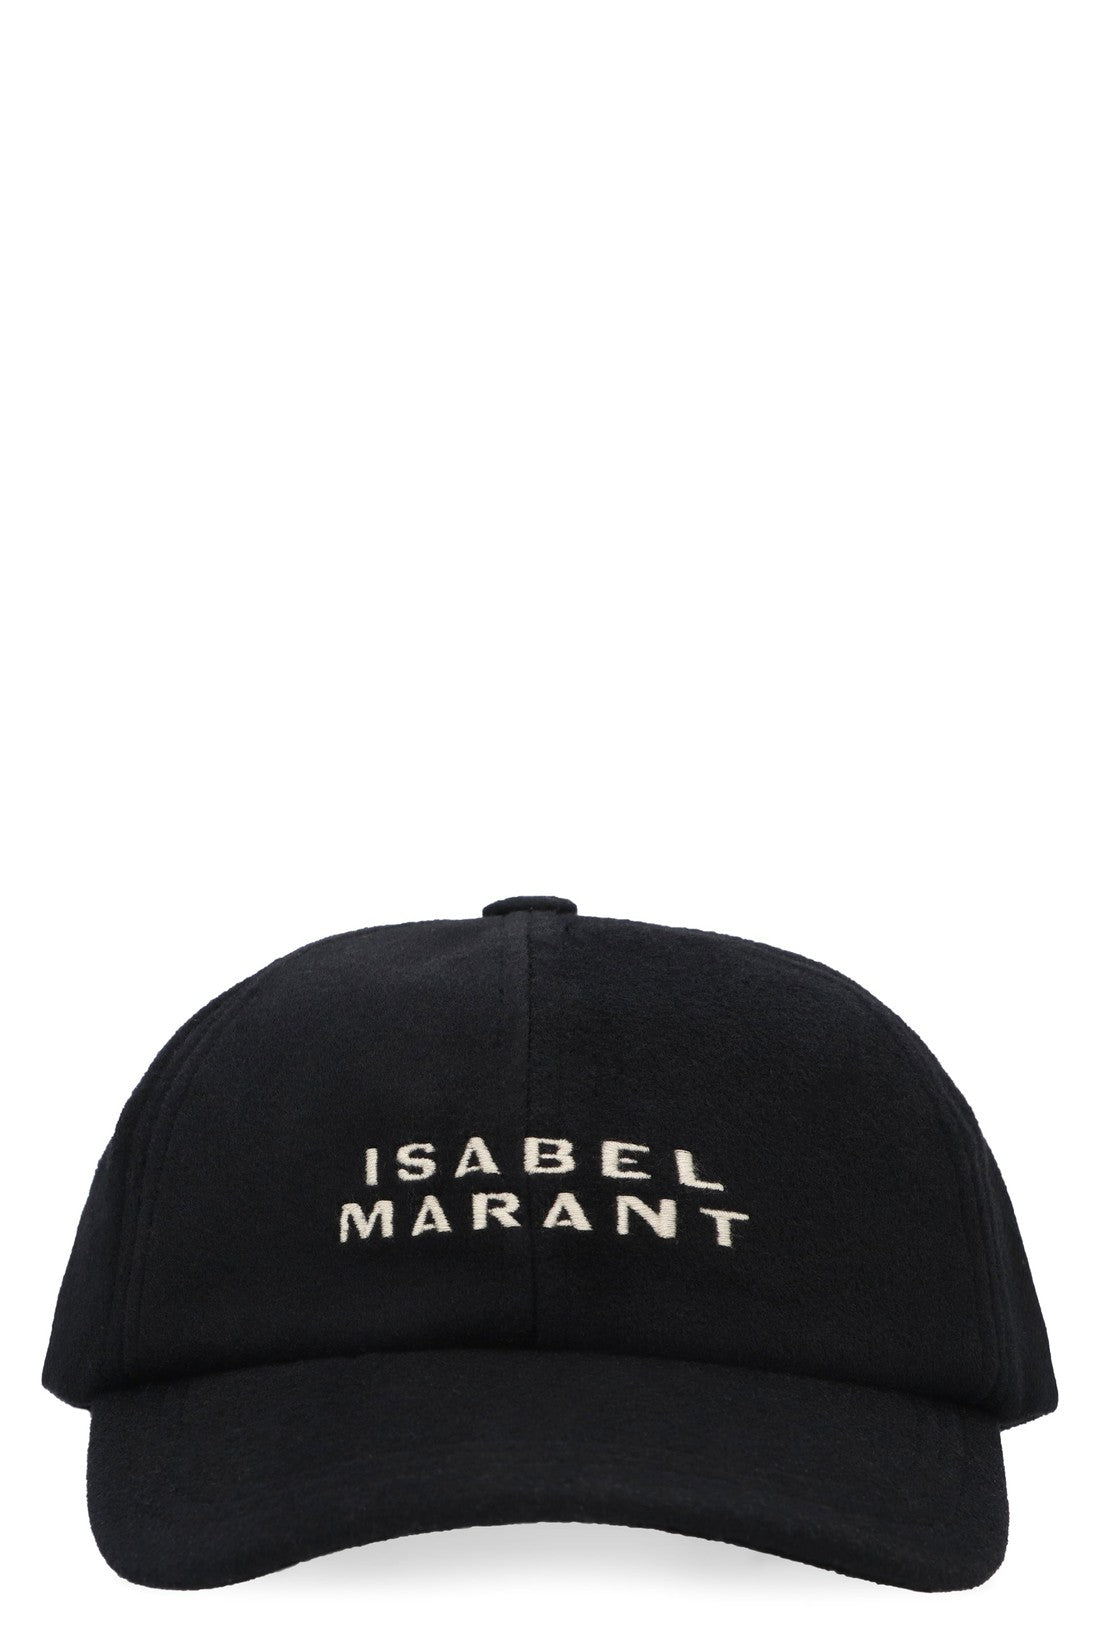 Isabel Marant-OUTLET-SALE-Tyron Logo baseball cap-ARCHIVIST